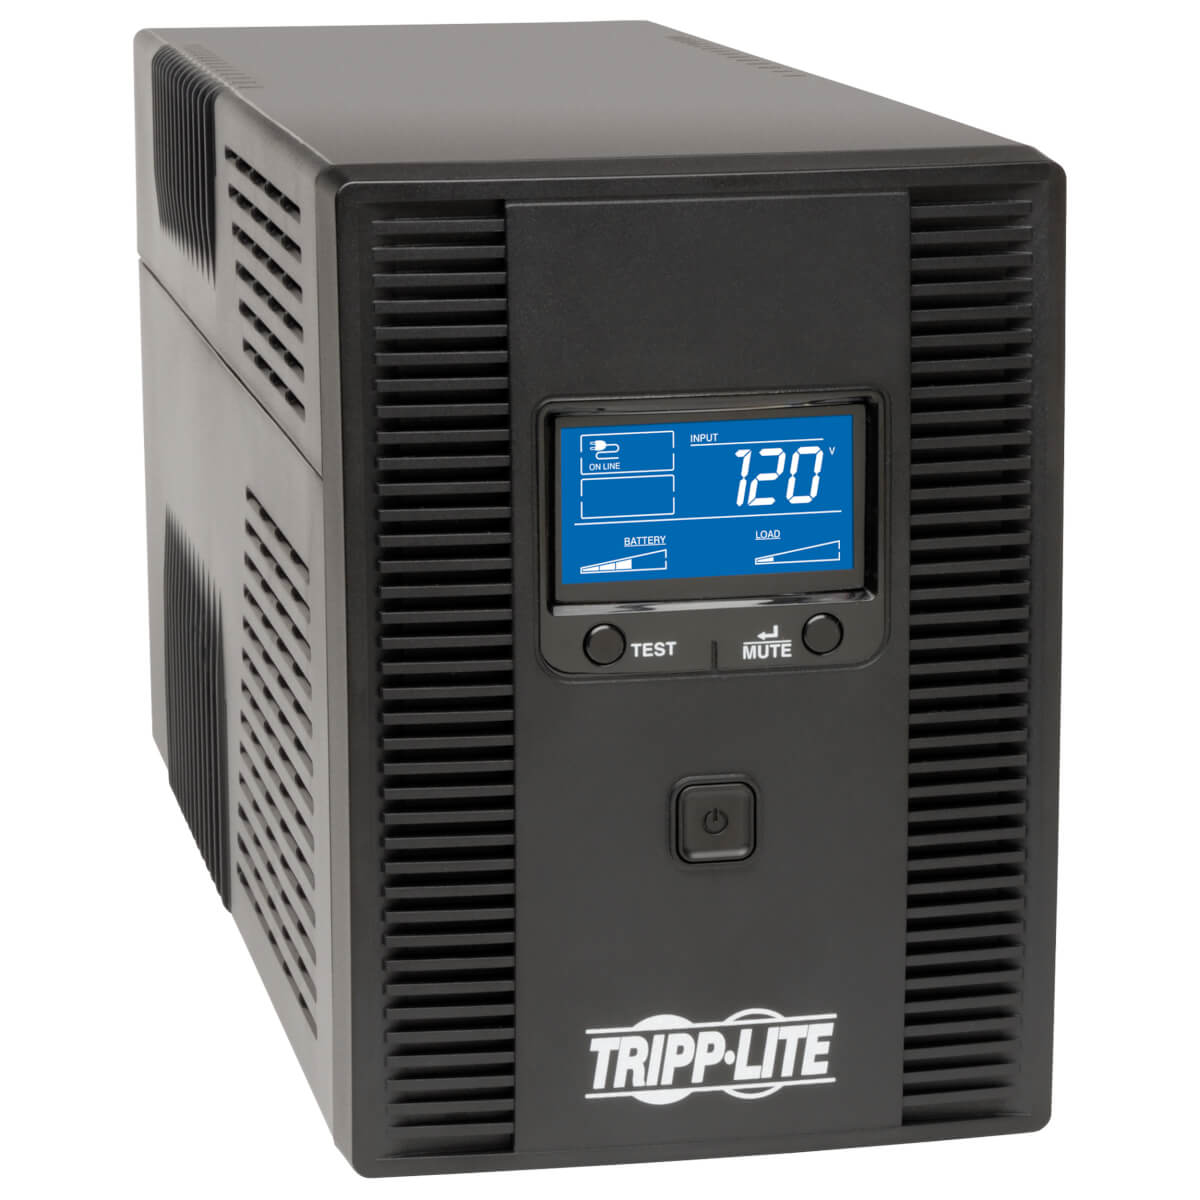 Tripp Lite OMNI1500LCDT UPS No Break OmniSmart Interactivo de 120V, 50Hz /60 Hz, 1500VA 810W, Torre, Pantalla LCD, puerto USB, Energy Star V2.0